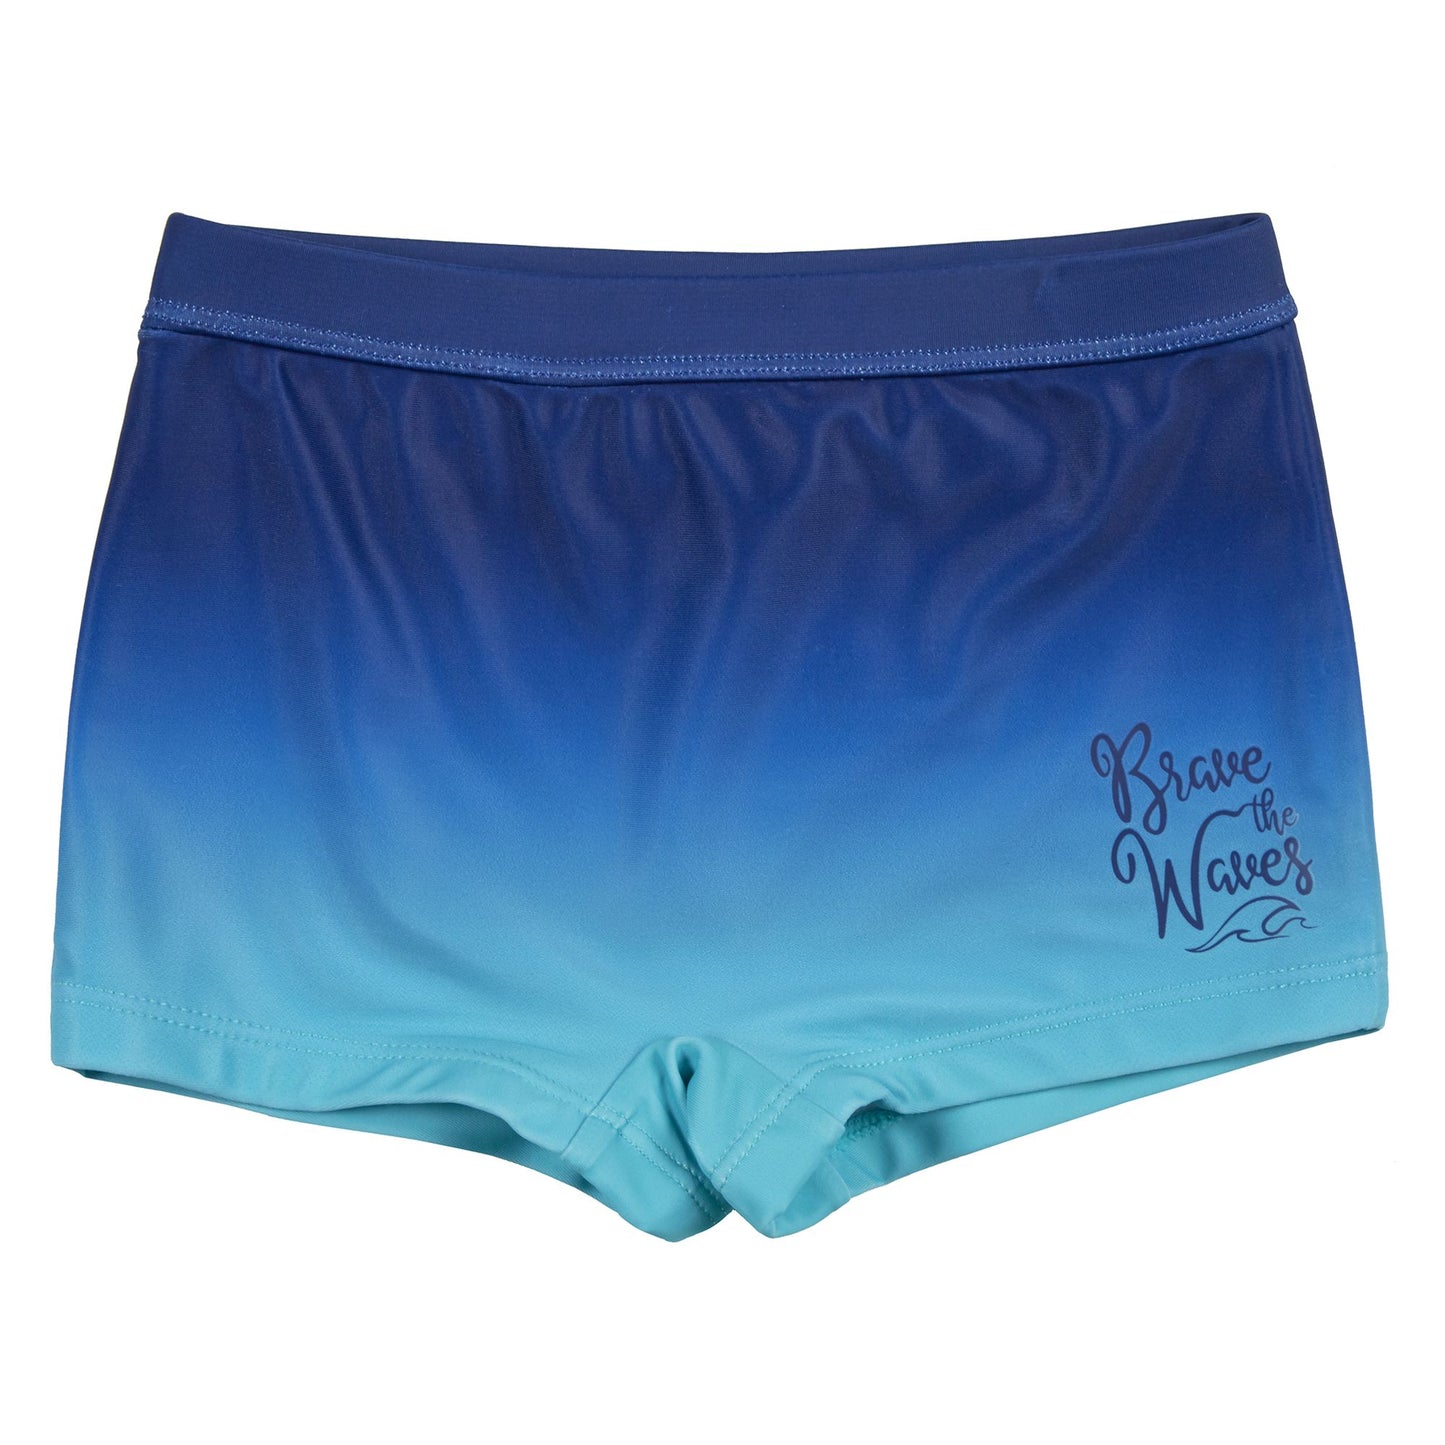 Boys Dip Dyed Swimming Trunk Shorts